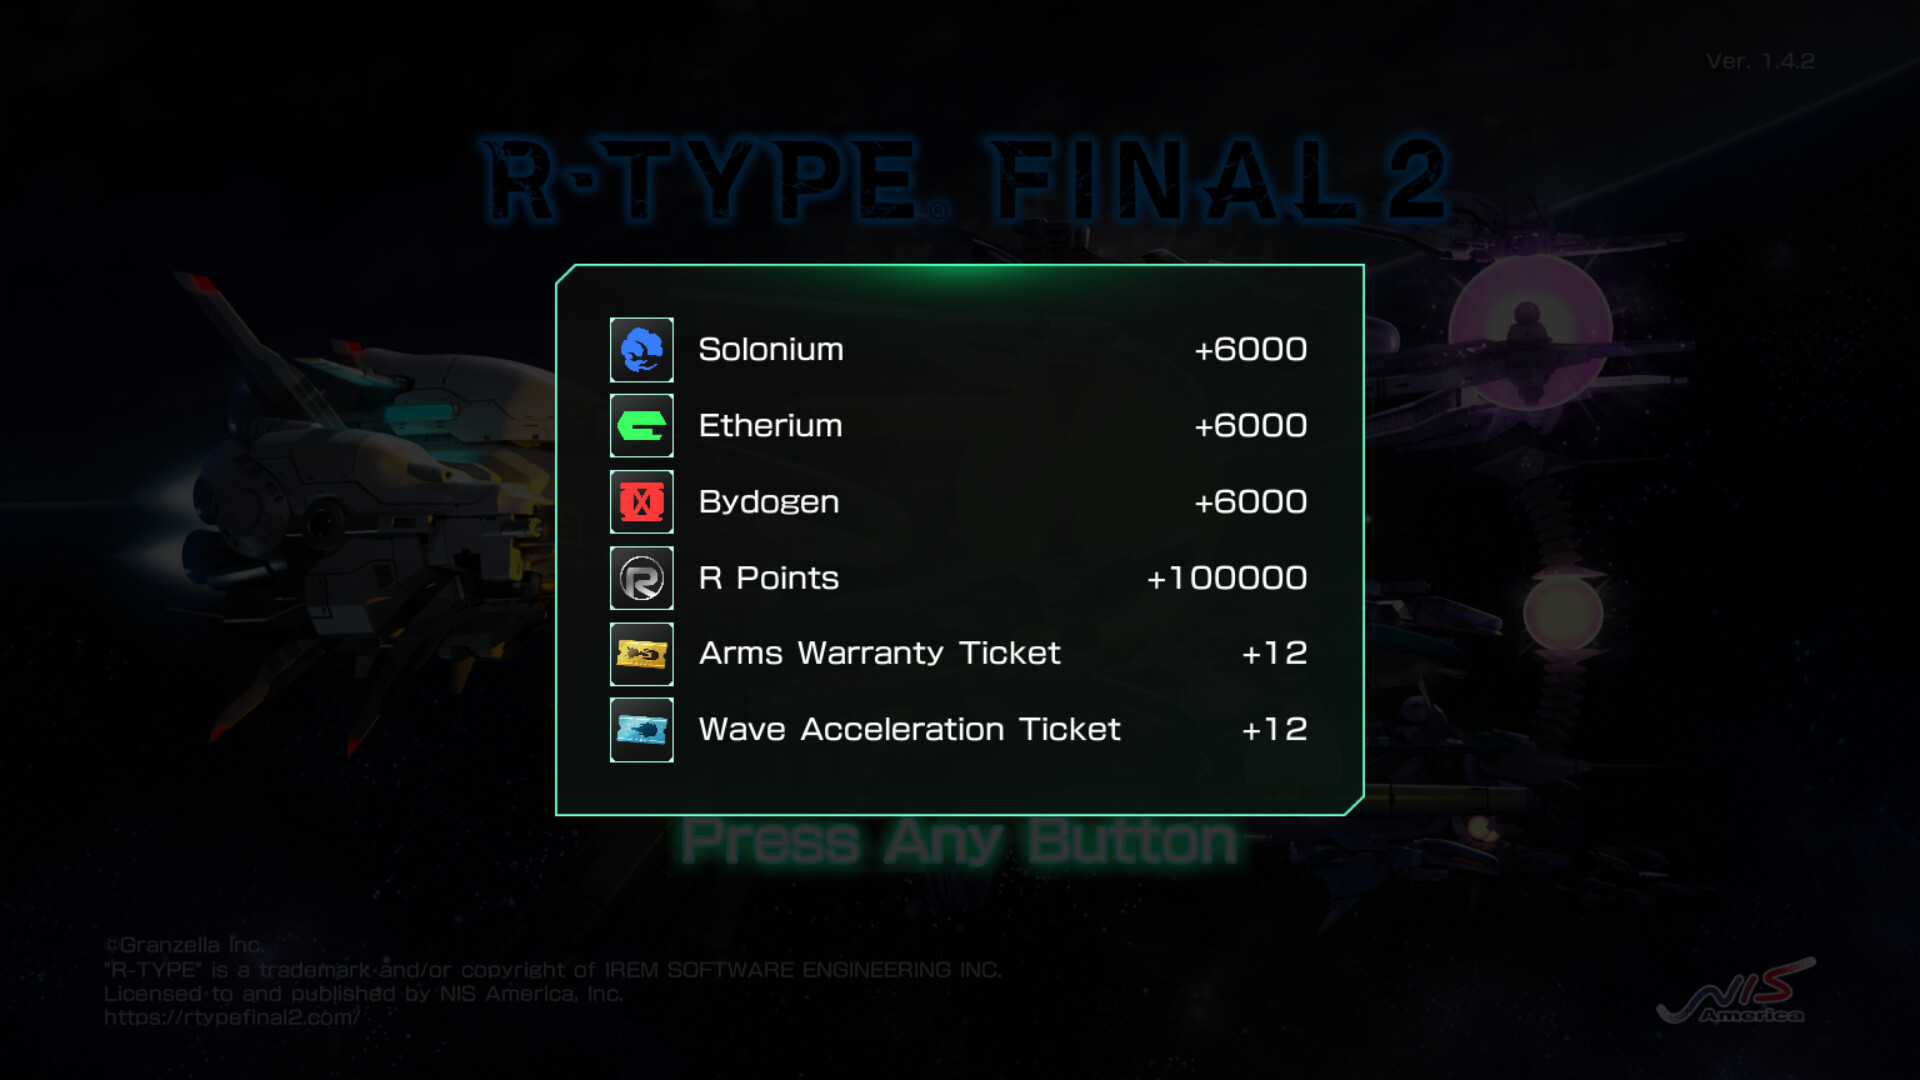 R-Type Final 2 - Ace Pilot Special Training Pack II DLC Steam CD Key, $4.66